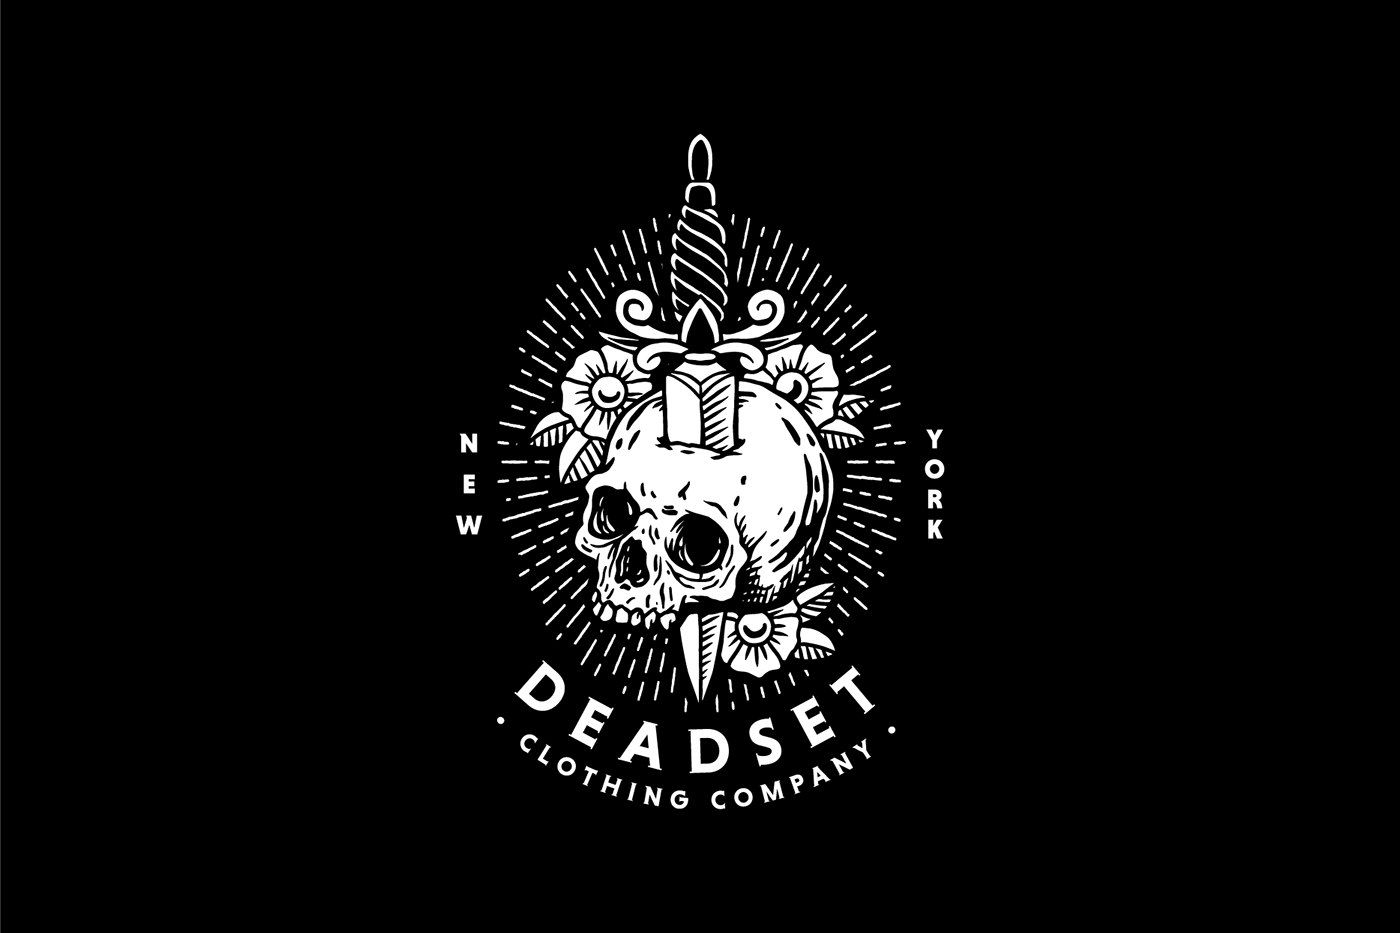 vector tattoo skull Muerte streetwear newyork deadset apparel tshirt nyc